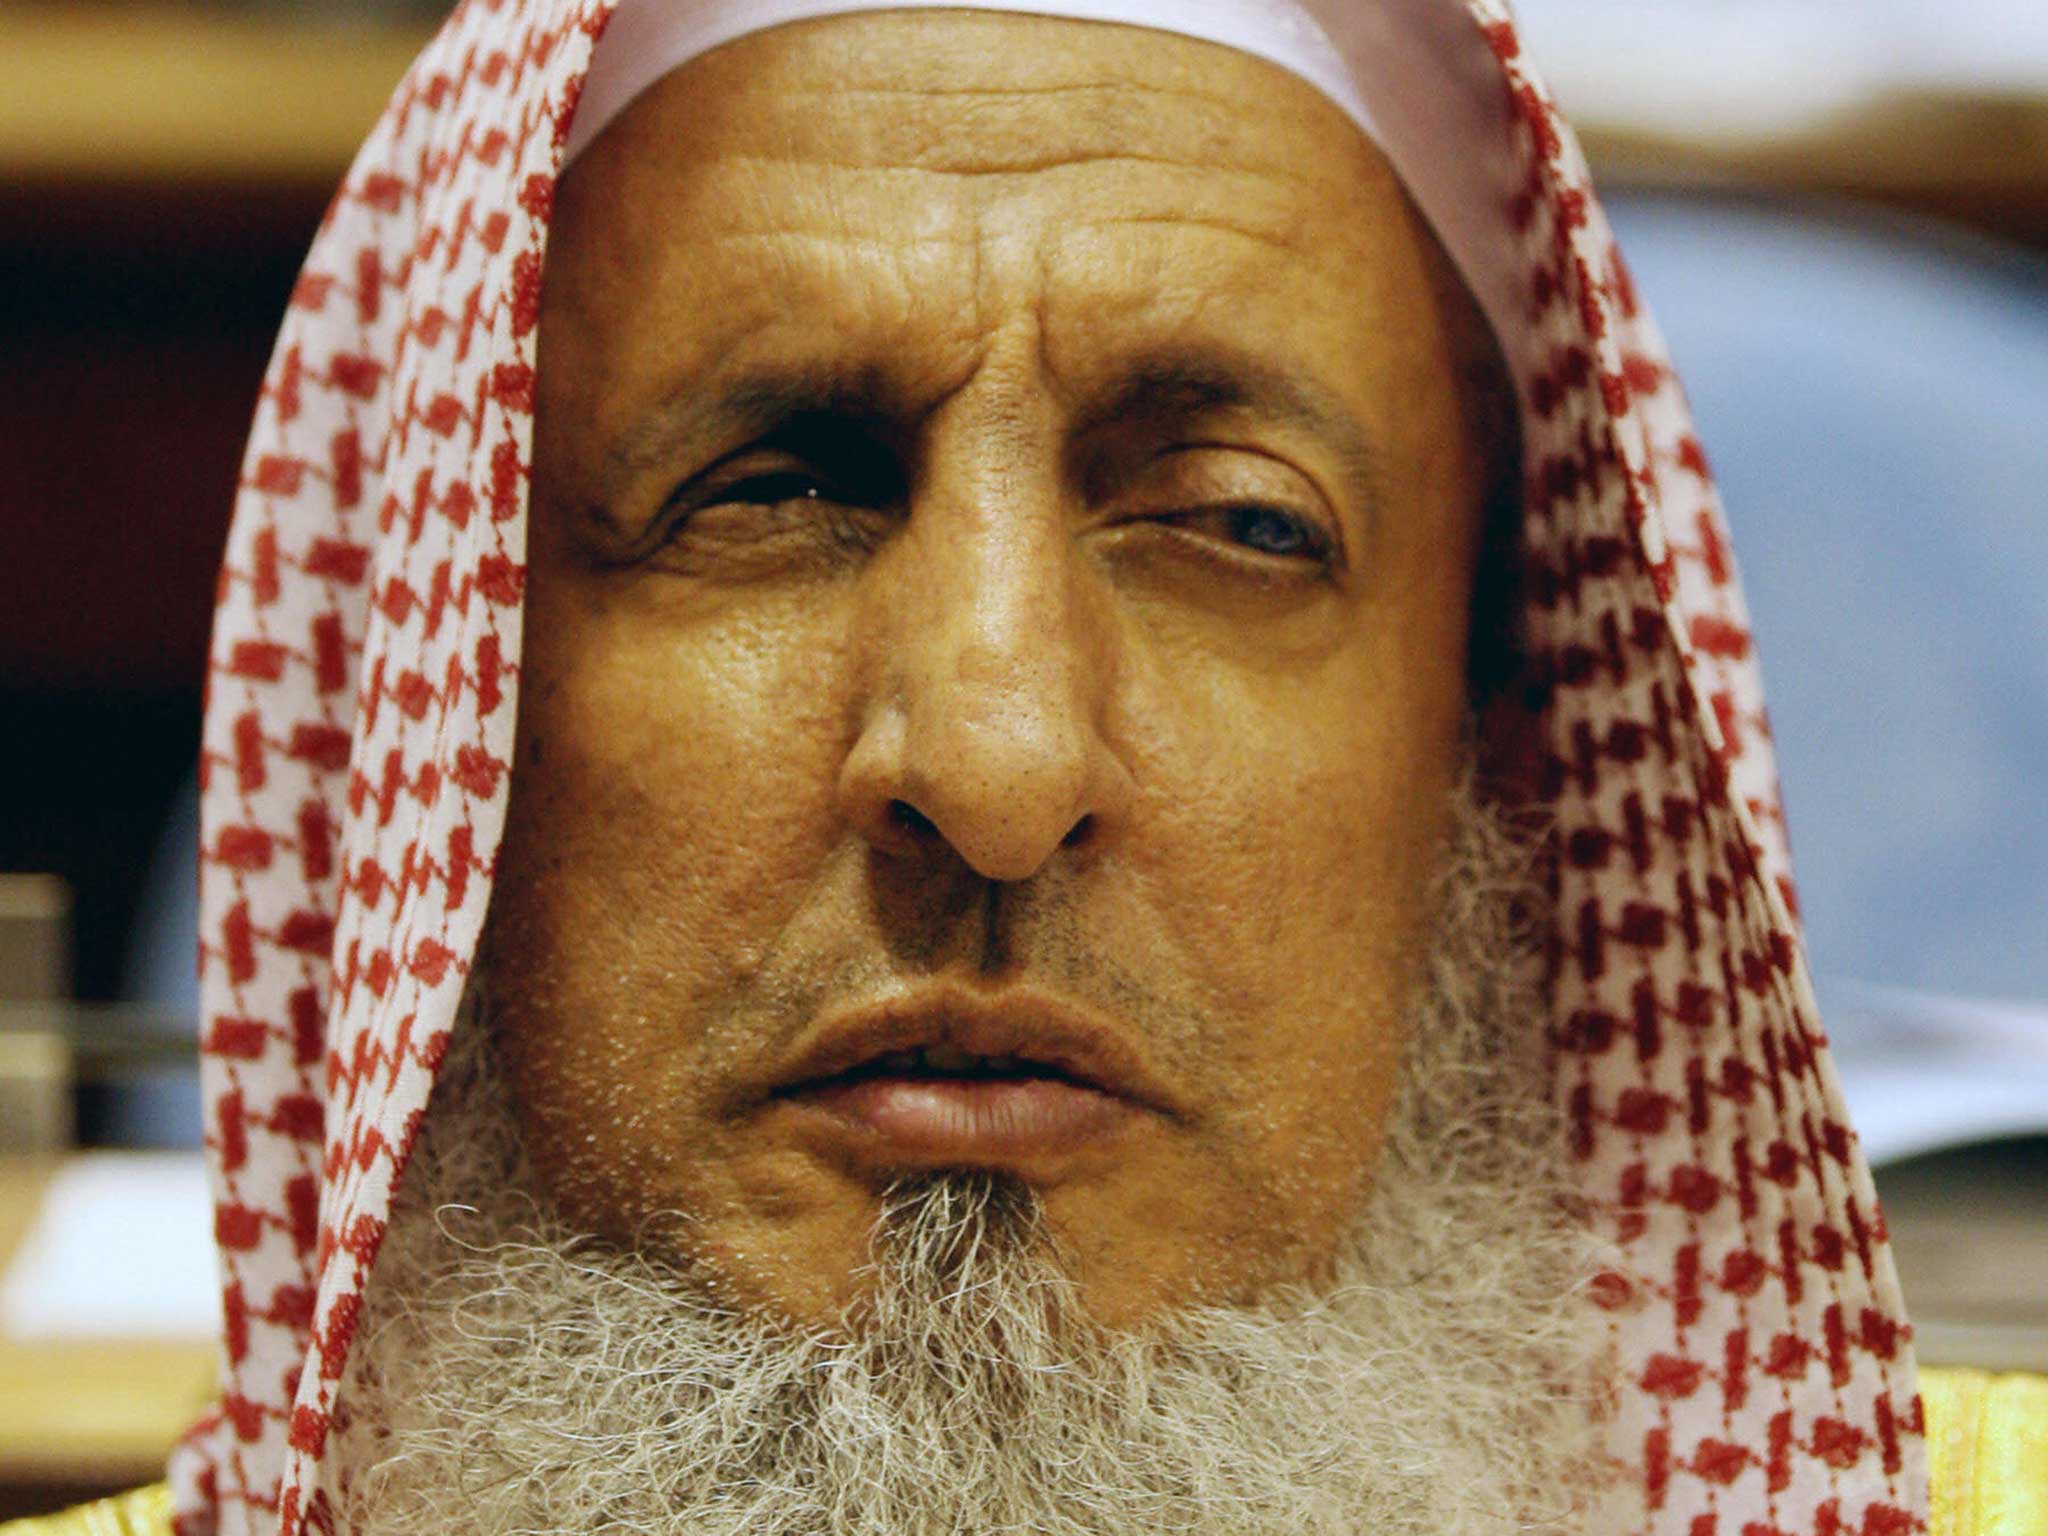 Saudi Grand Mufti Sheikh Abdul Aziz al-Sheikh listens to the speech of Saudi King Abdullah bin Abdul Aziz al-Saud in 2008